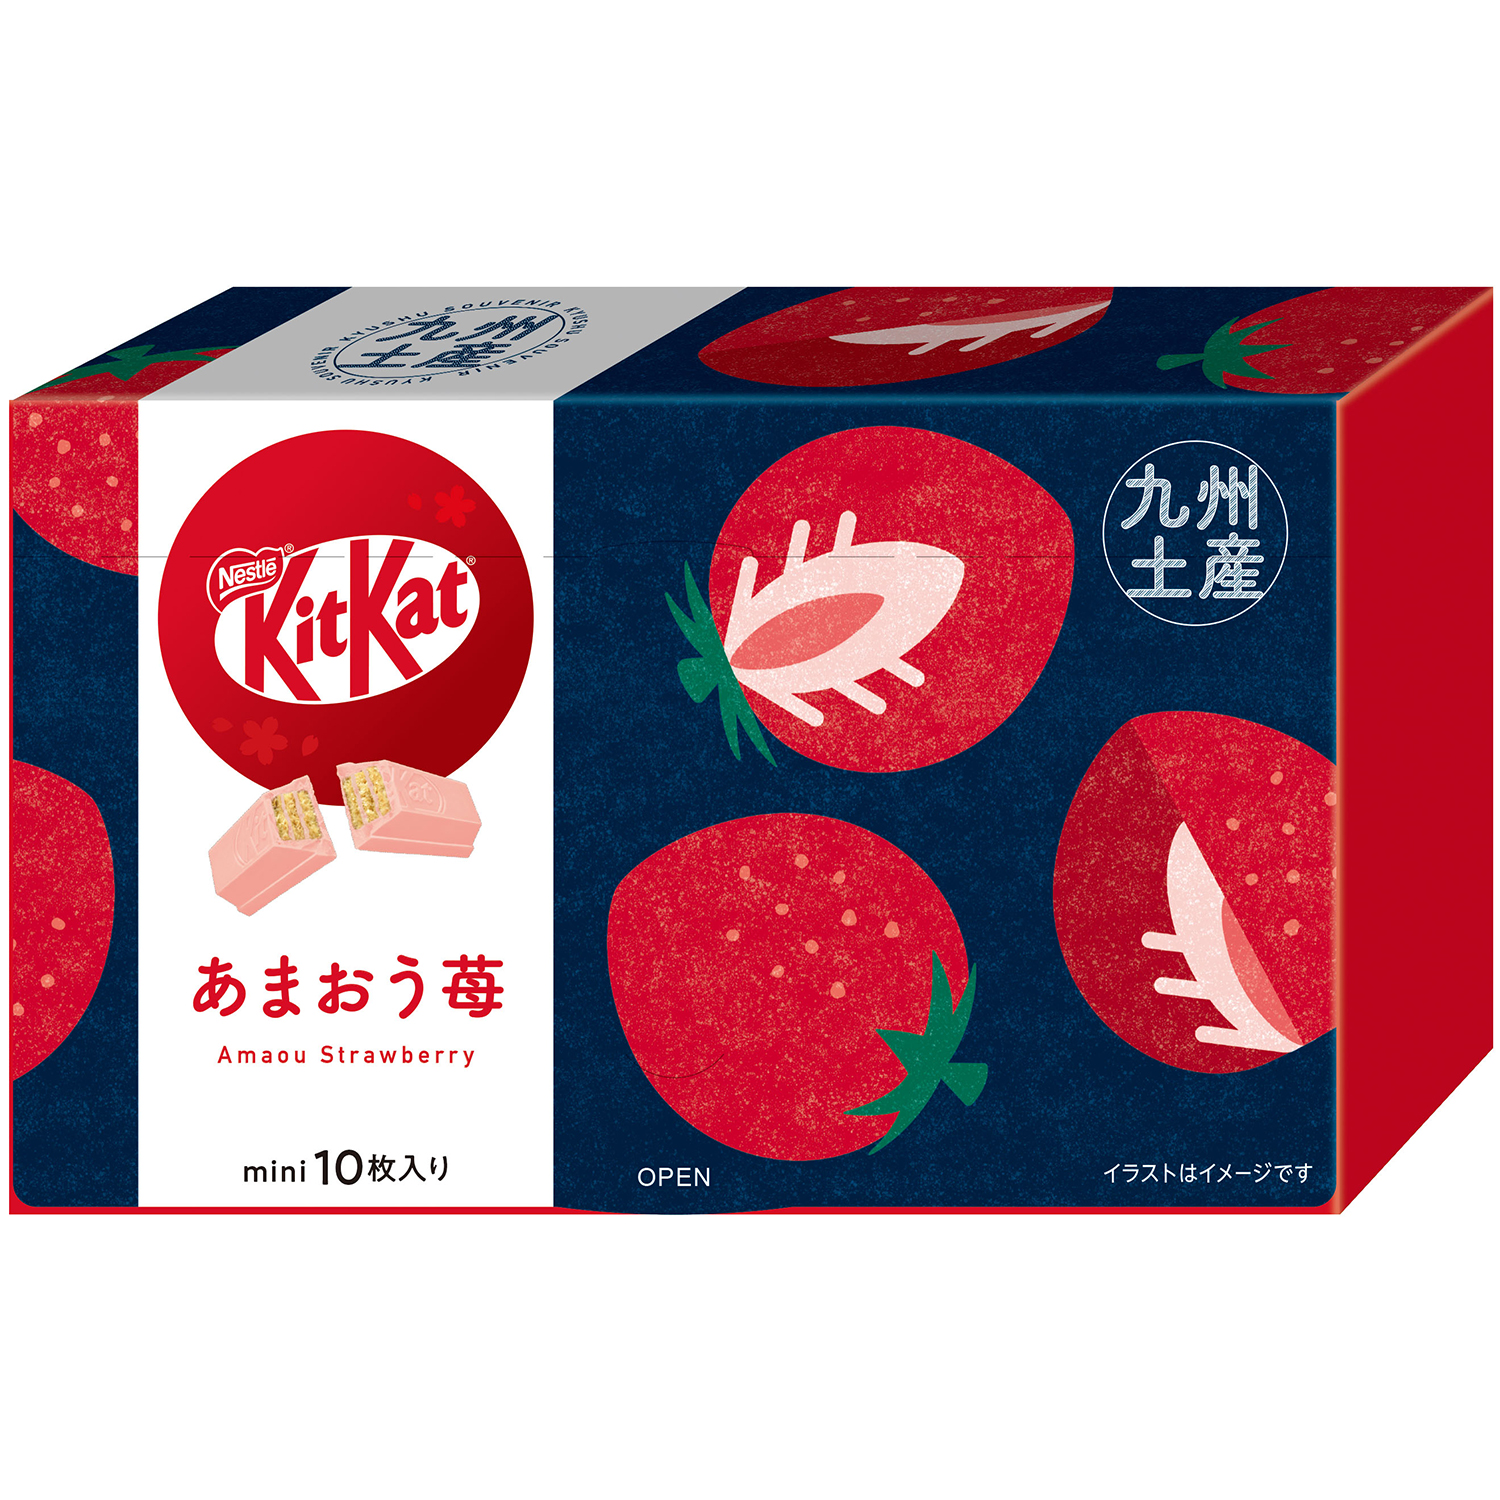 Kit Kat Mini Amaou Strawberry